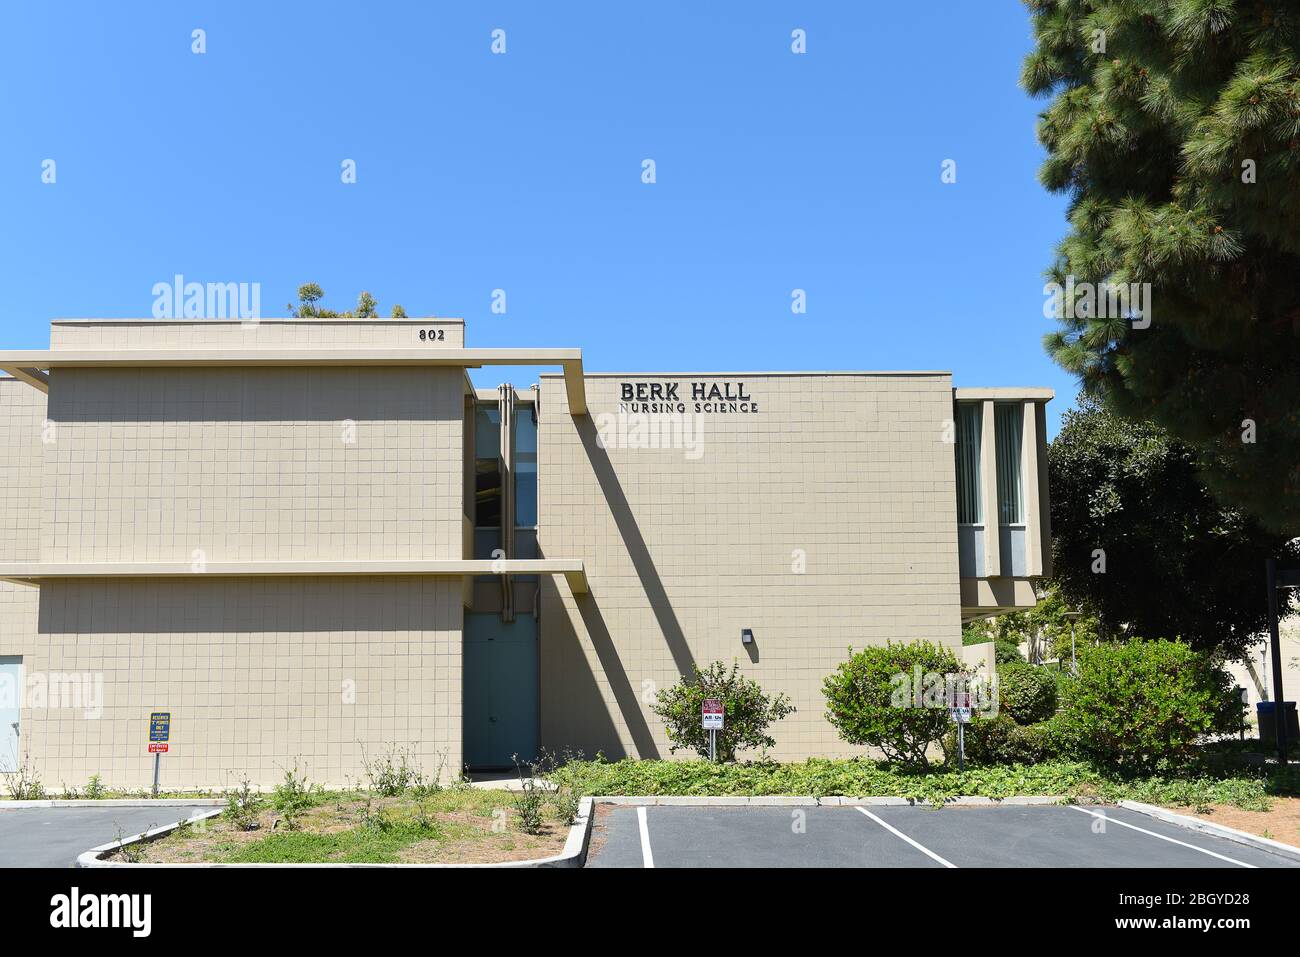 IRVINE, KALIFORNIEN - 22. APRIL 2020: Berk Hall Nursing Science Gebäude auf dem Campus der University of California Irvine, UCI. Stockfoto